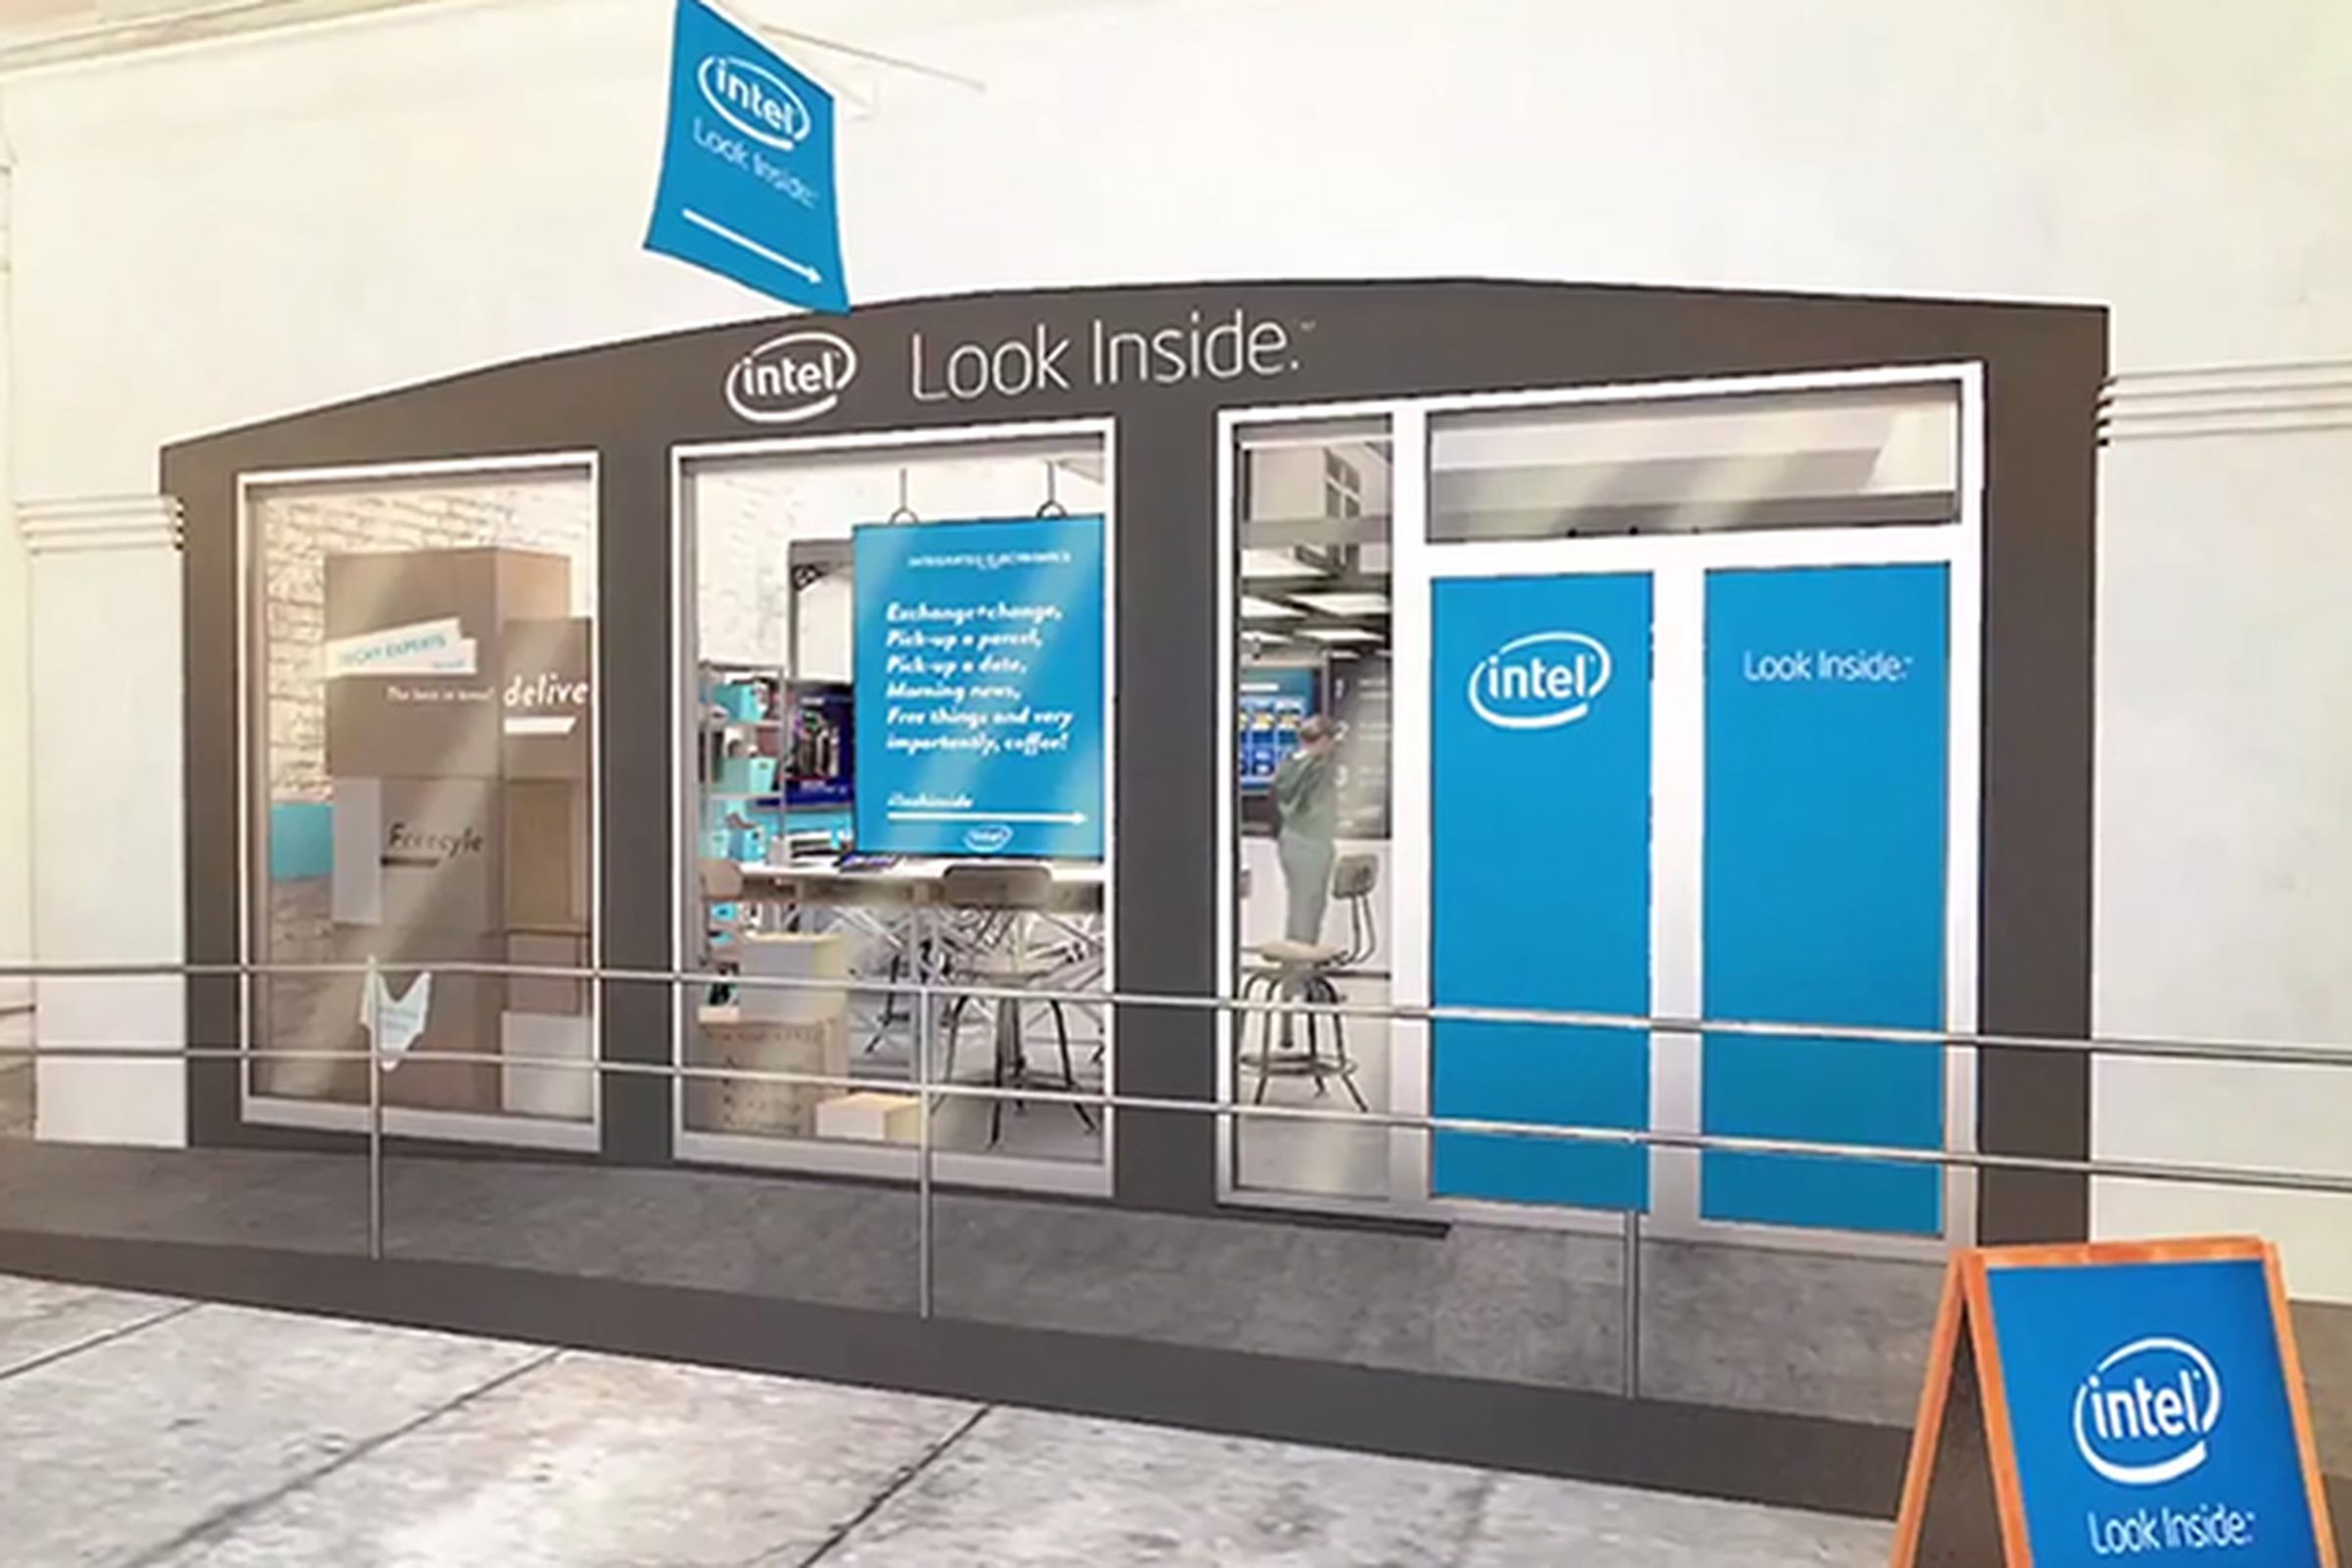 Intel stores